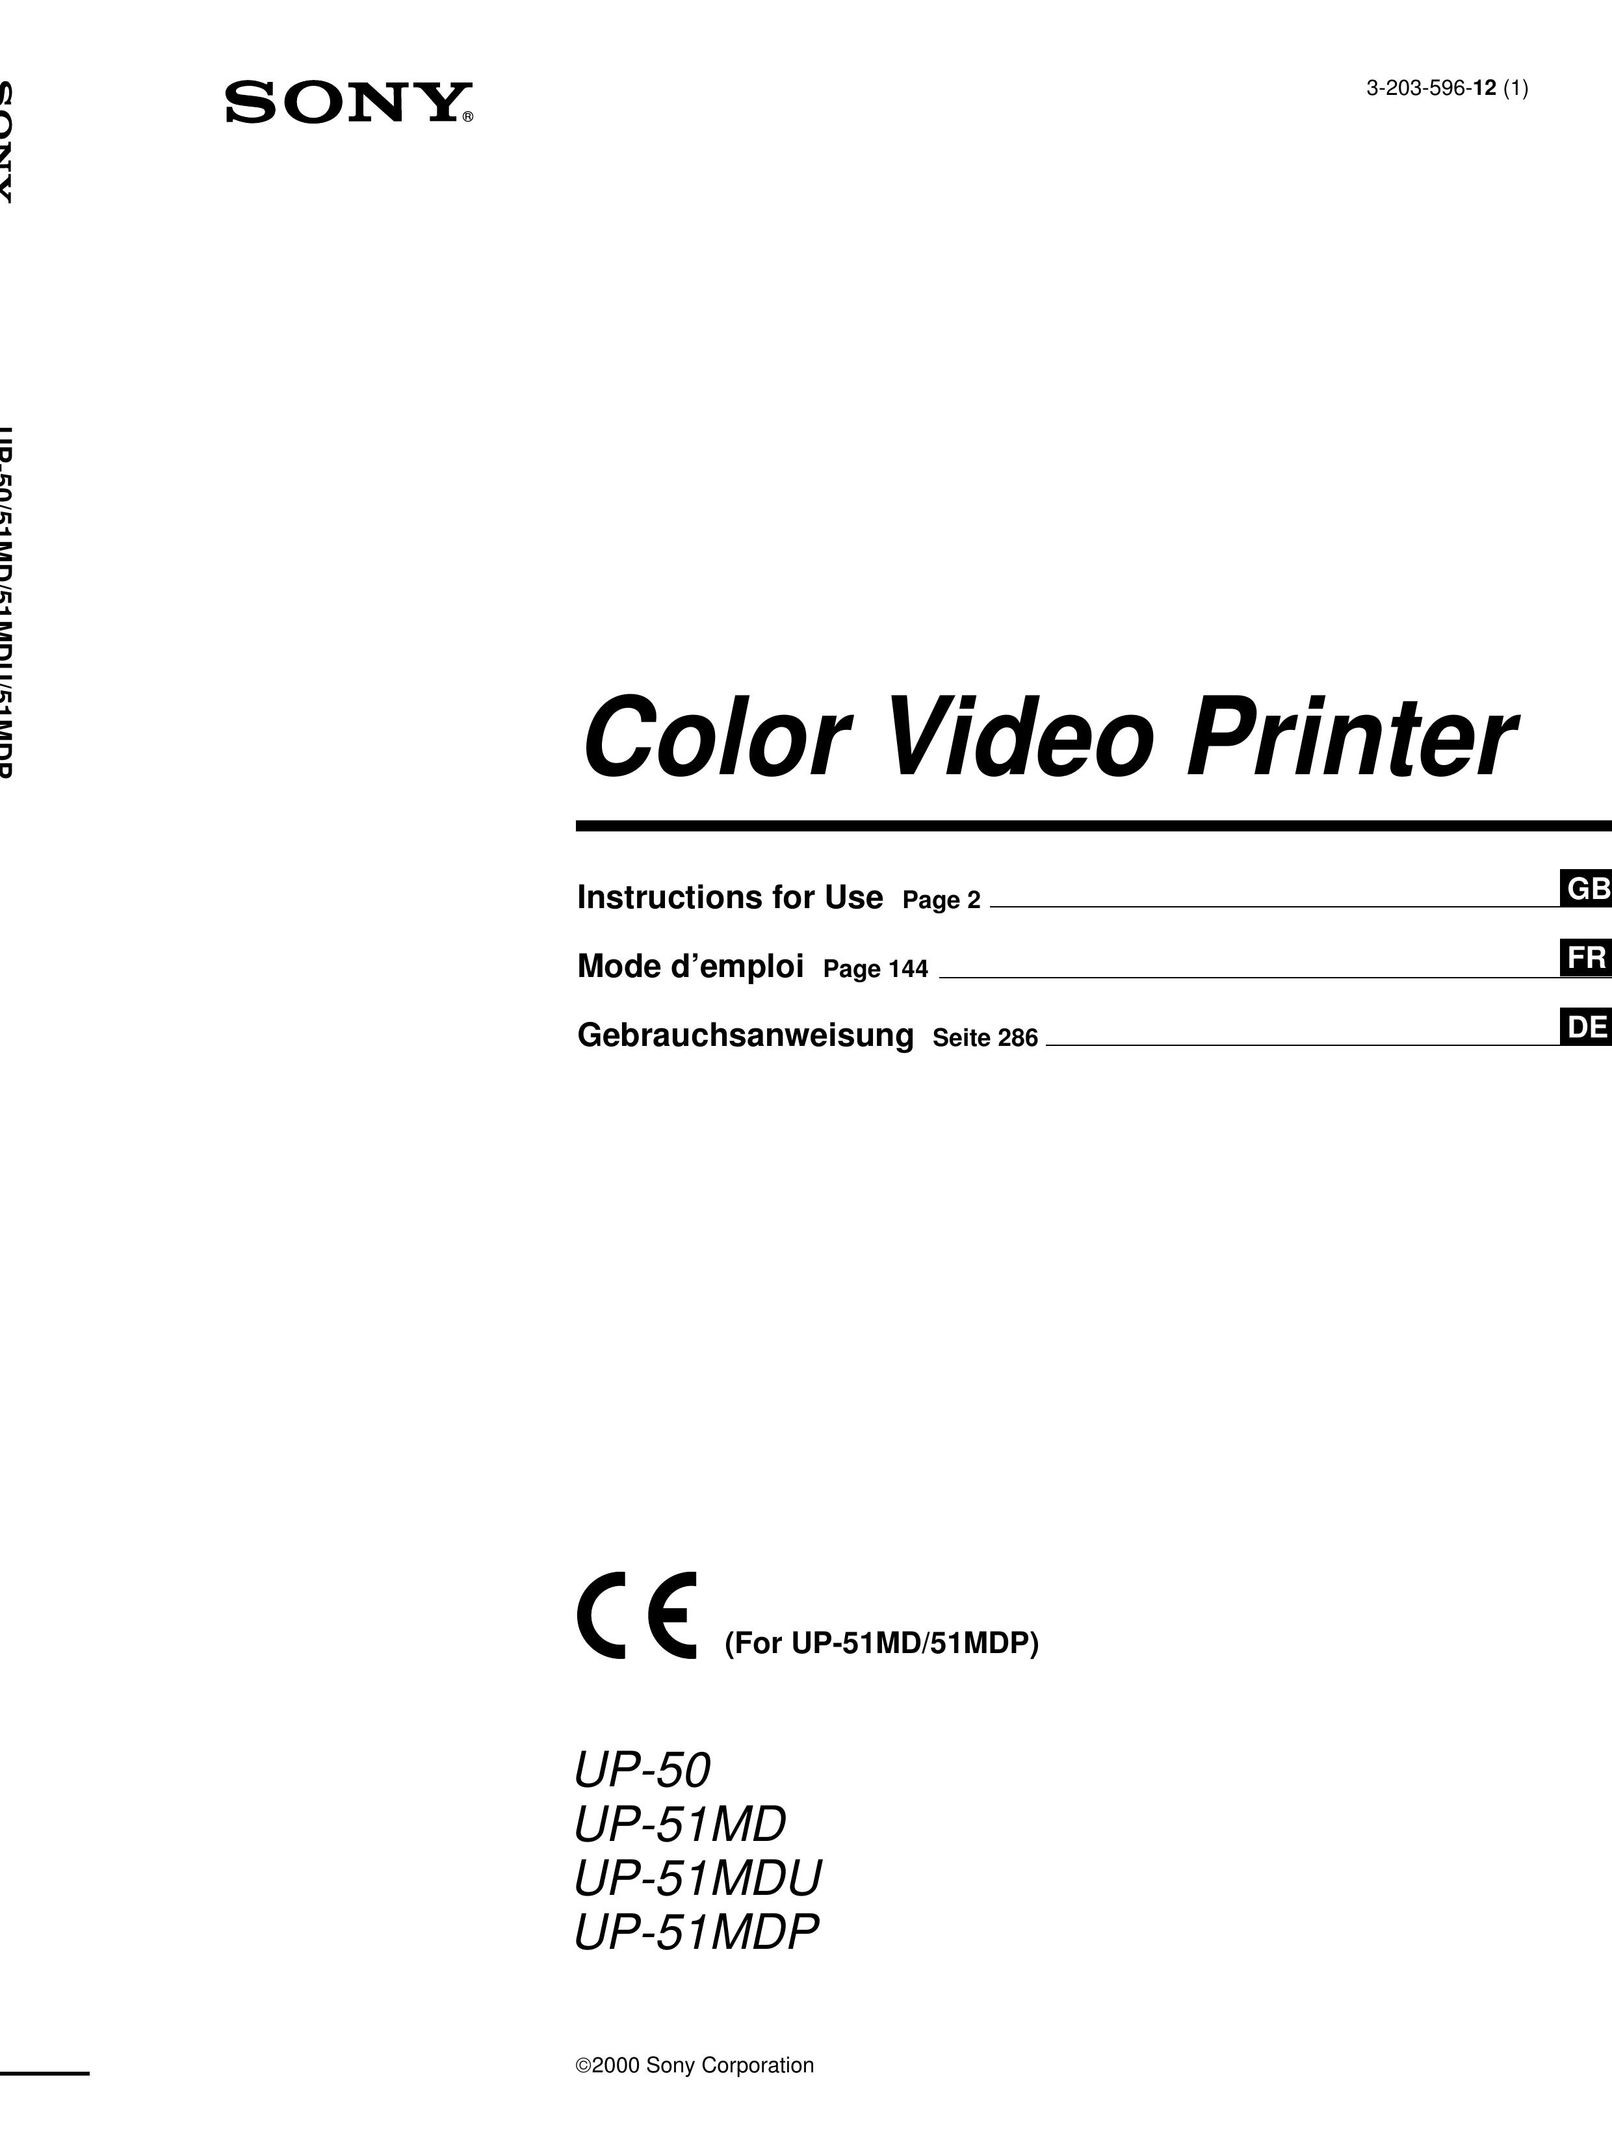 Sony UP-51MDP Printer User Manual